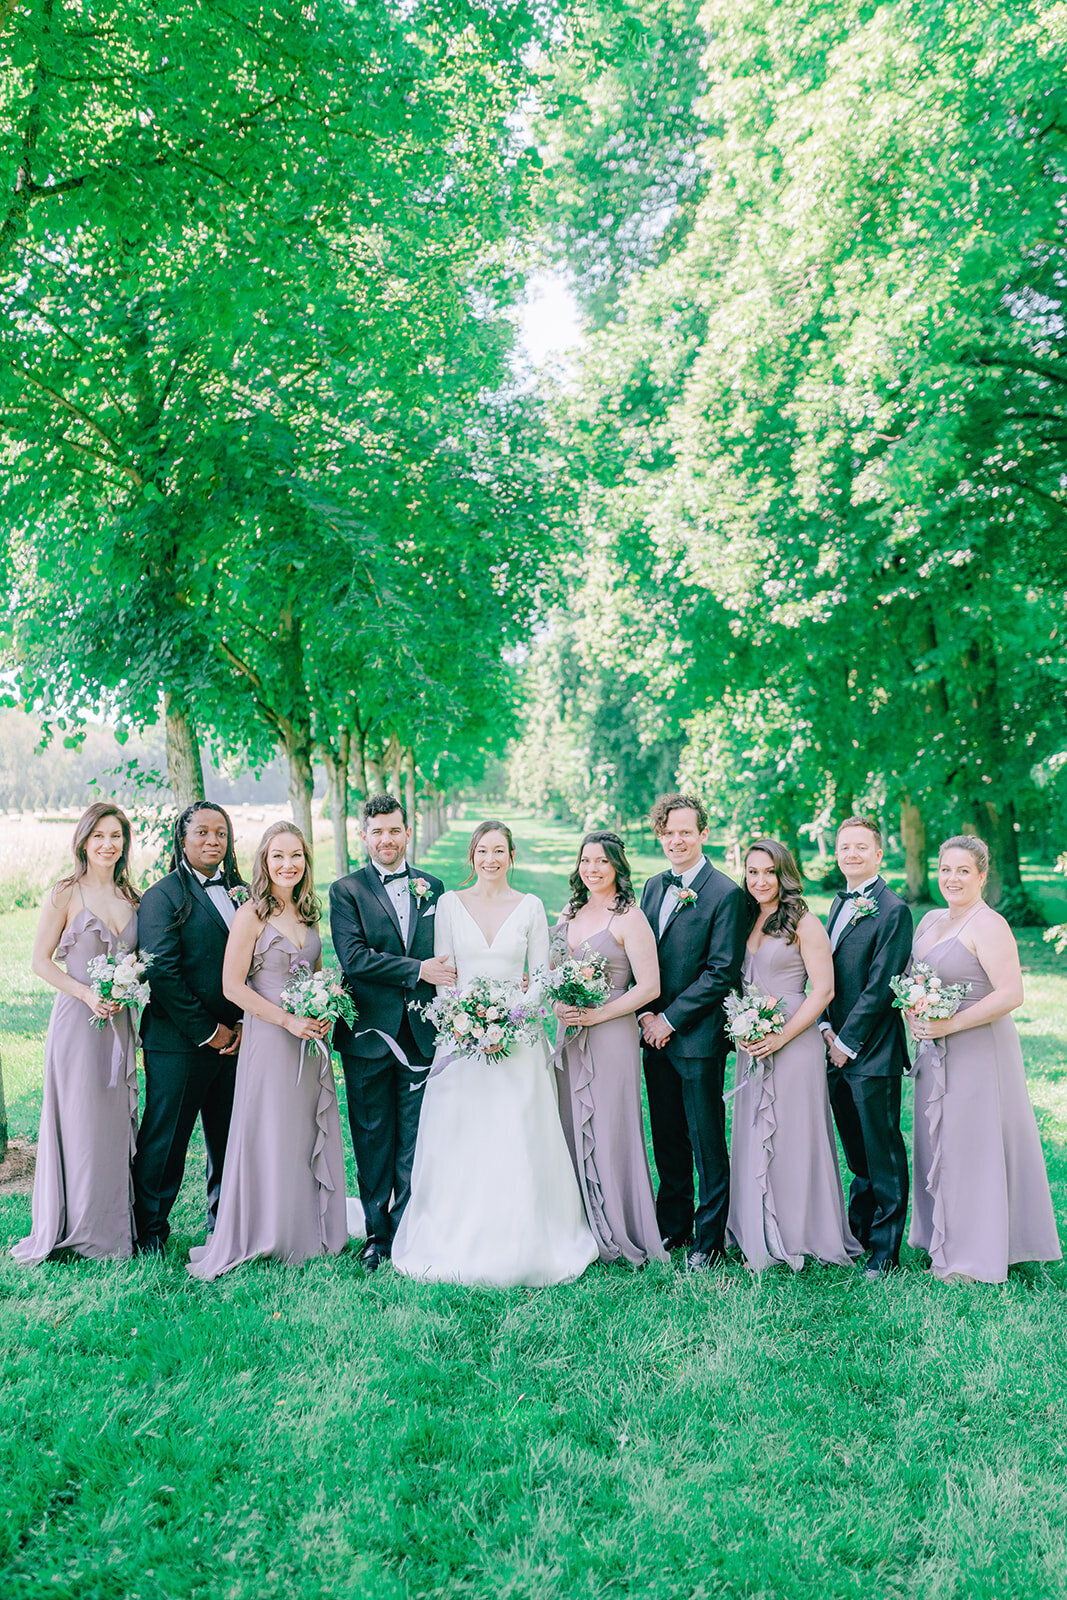 MorganeBallPhotography-WEDDING-ElizabethPhil-02-Weddingday-05-photosession-422-1517